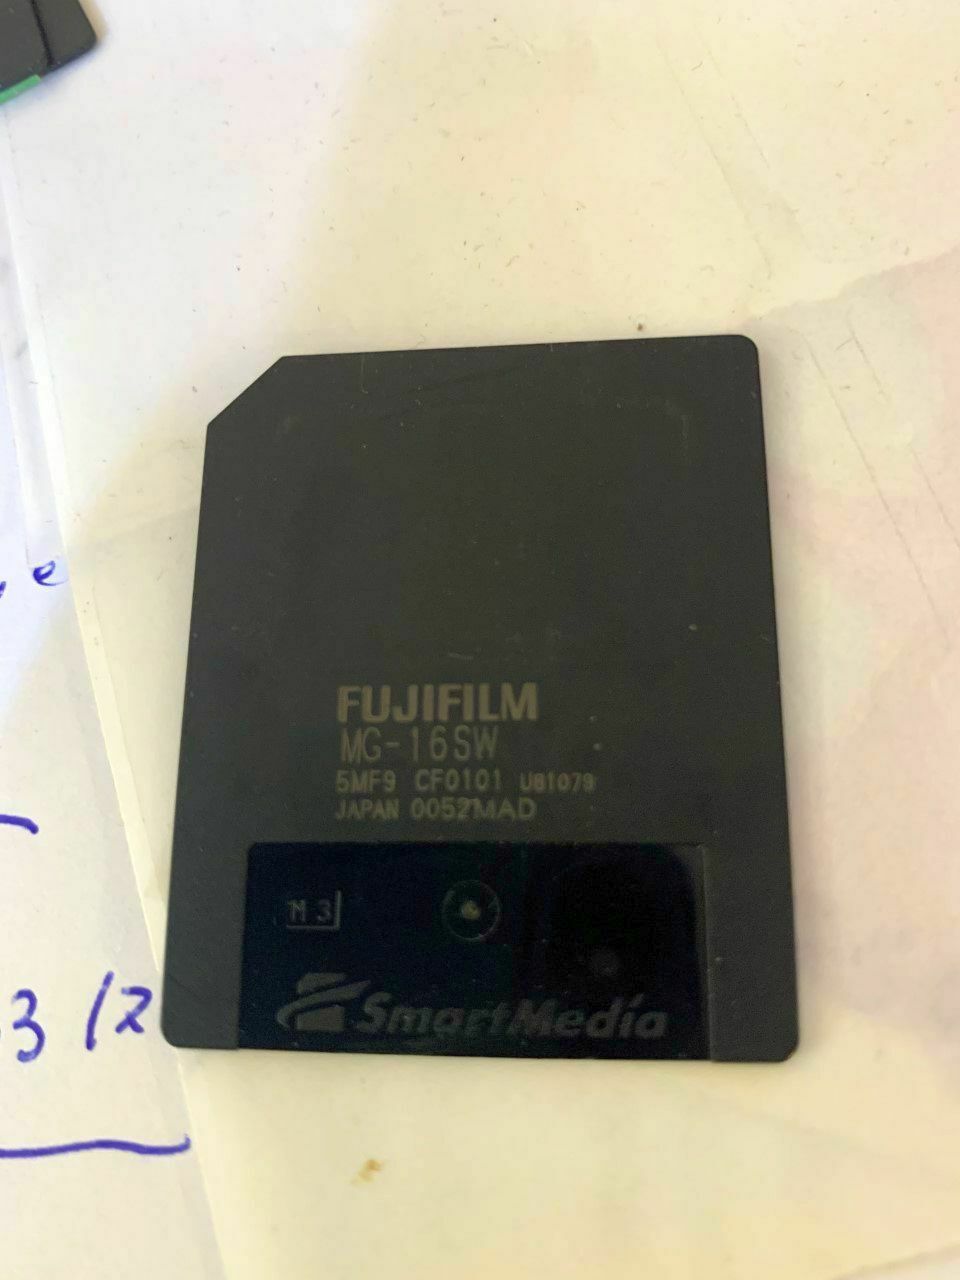 Fujifilm mg-16sw memory card smart media 16 mb sm memory card - $51.52